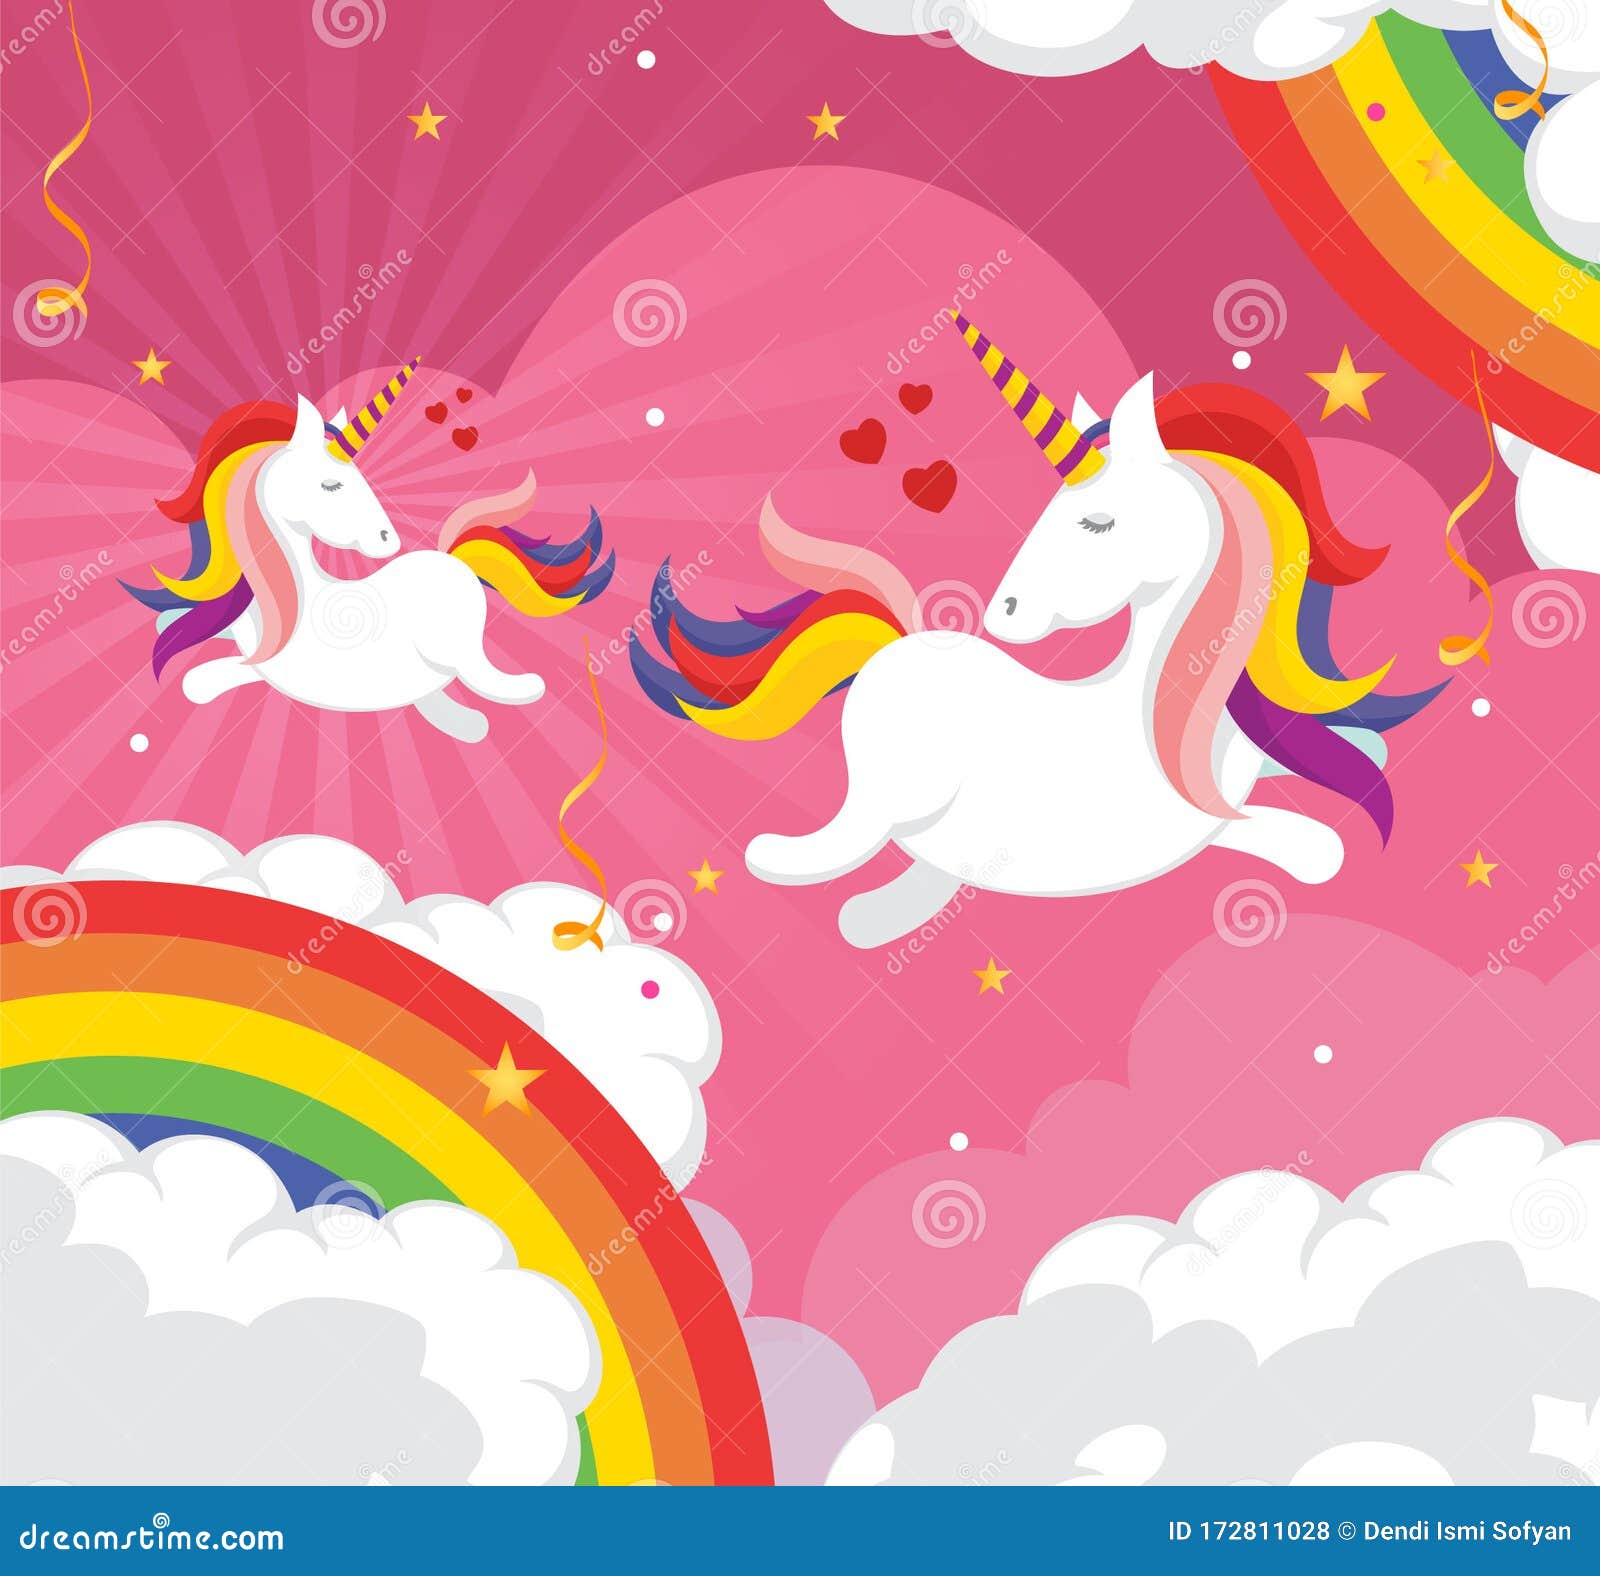 Rainbow Unicorn In A Fantasy Landscape Vector Illustration Stock Vector